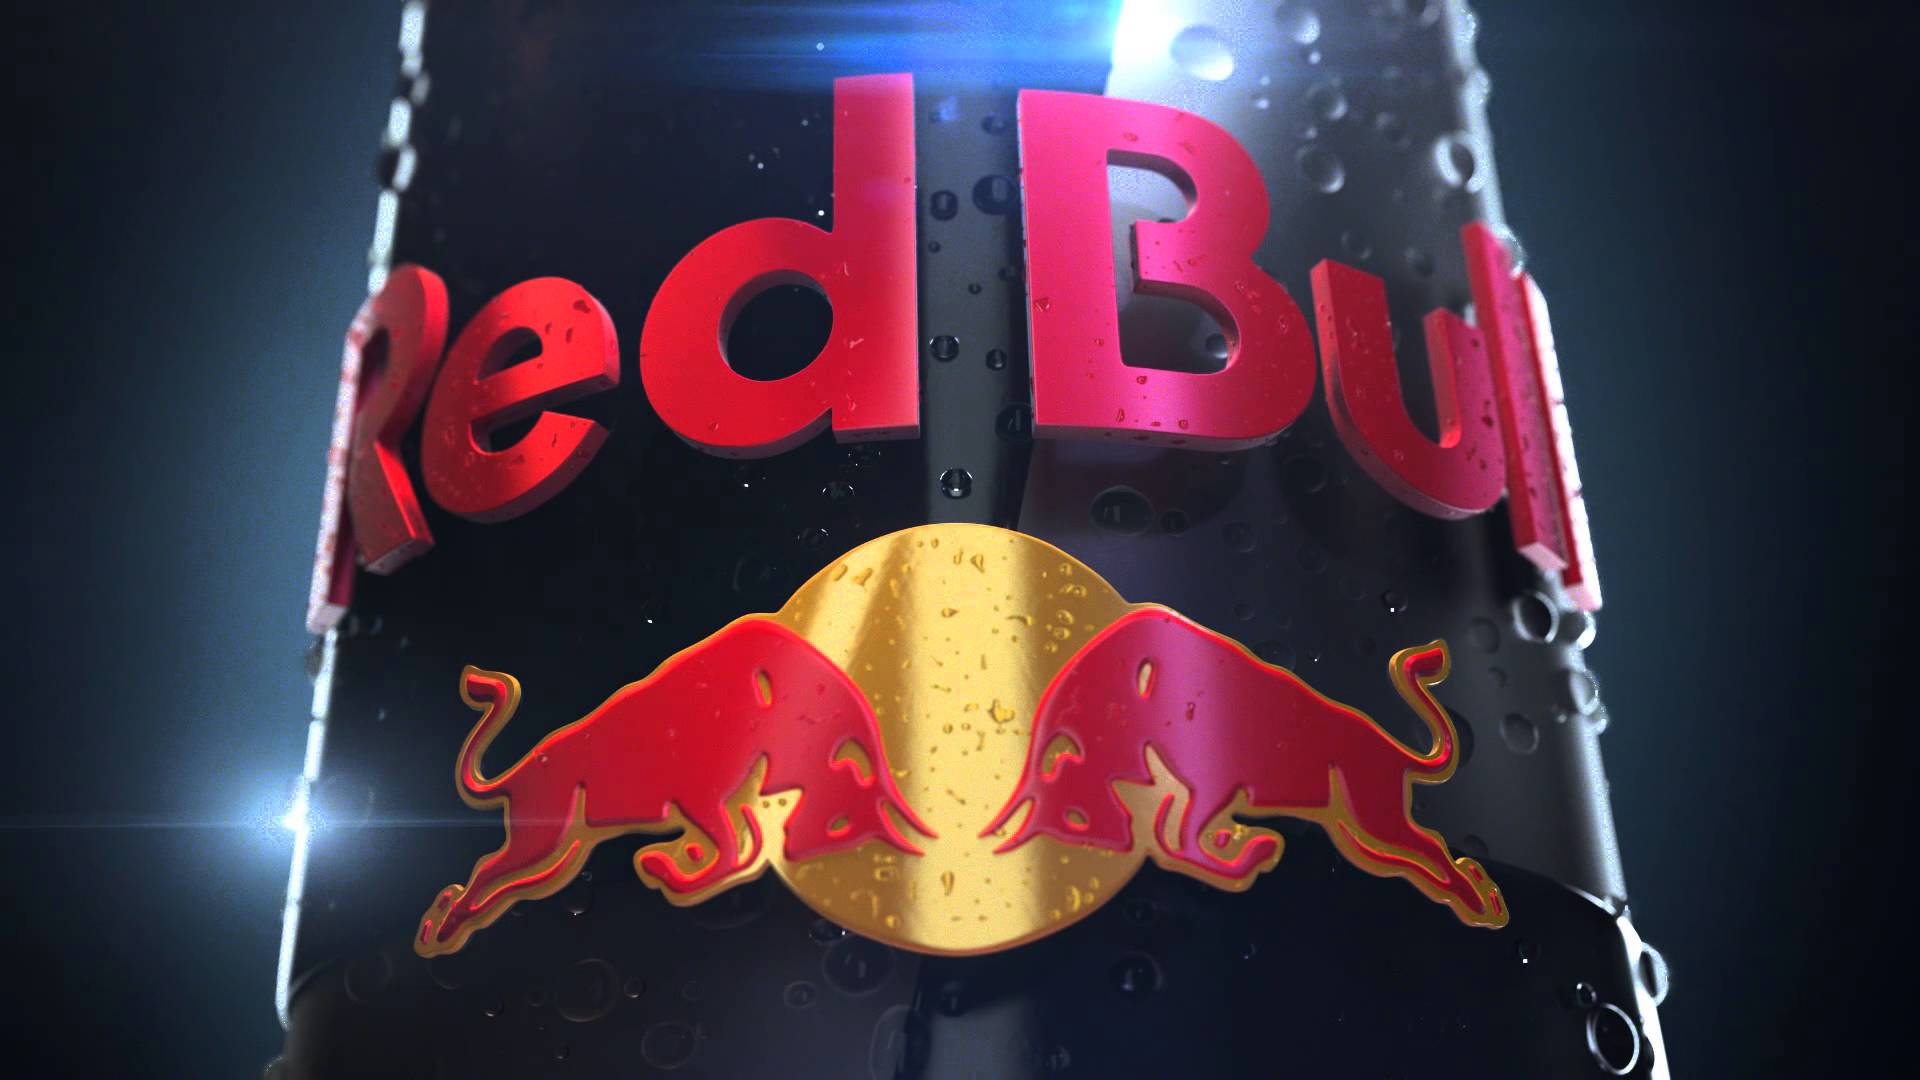 Red Bull Zero Calories HD Wallpaper, Background Image